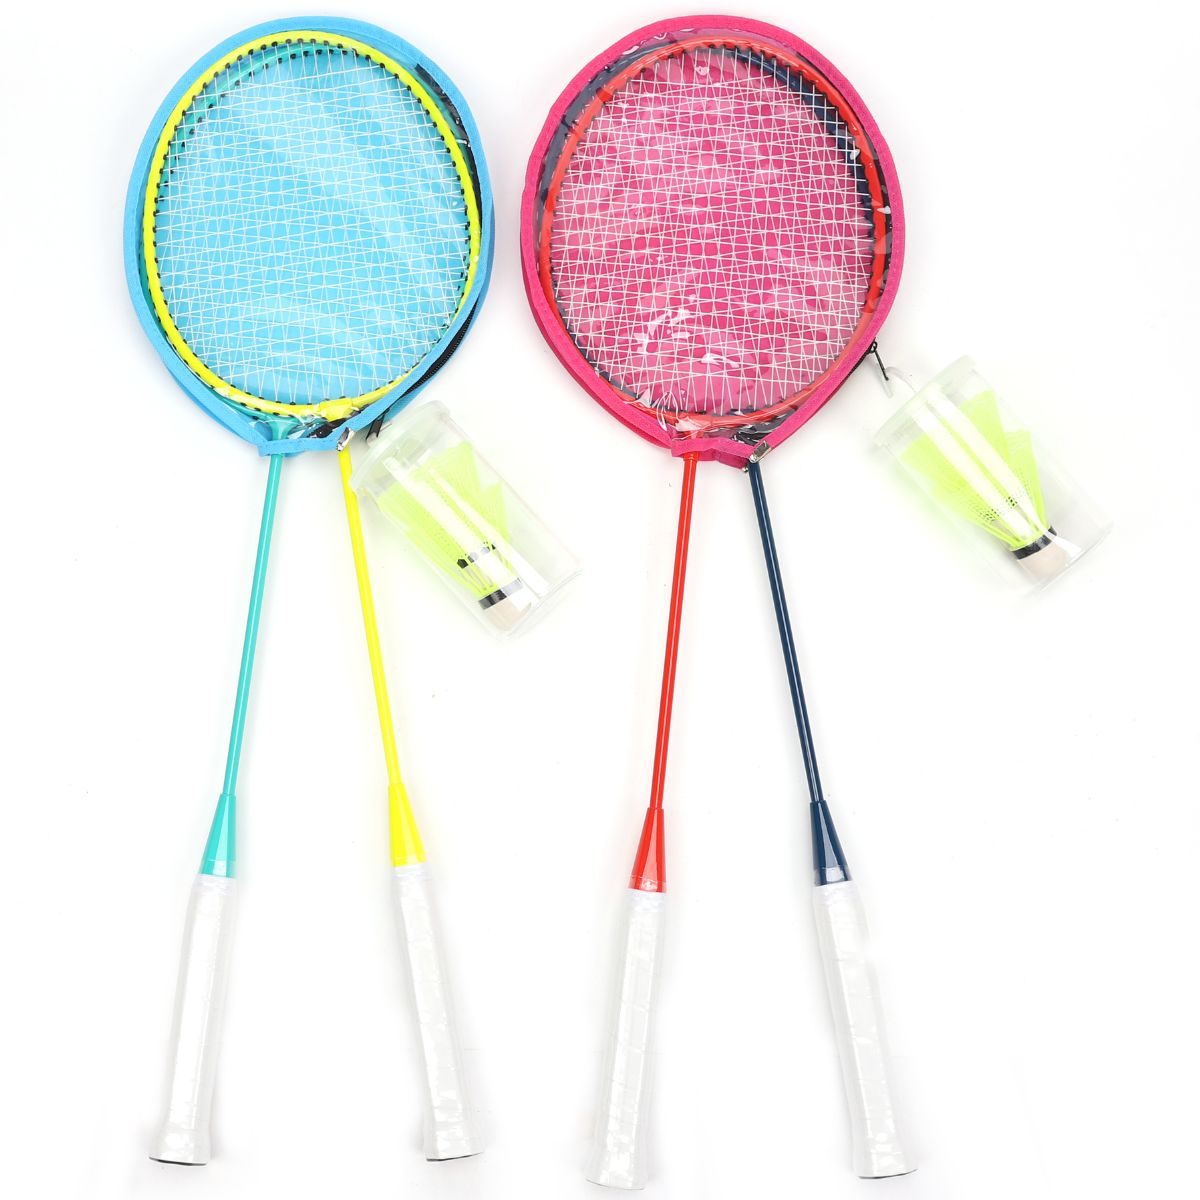 cj-badminton-crf-set-adult-od148531-1.jpg